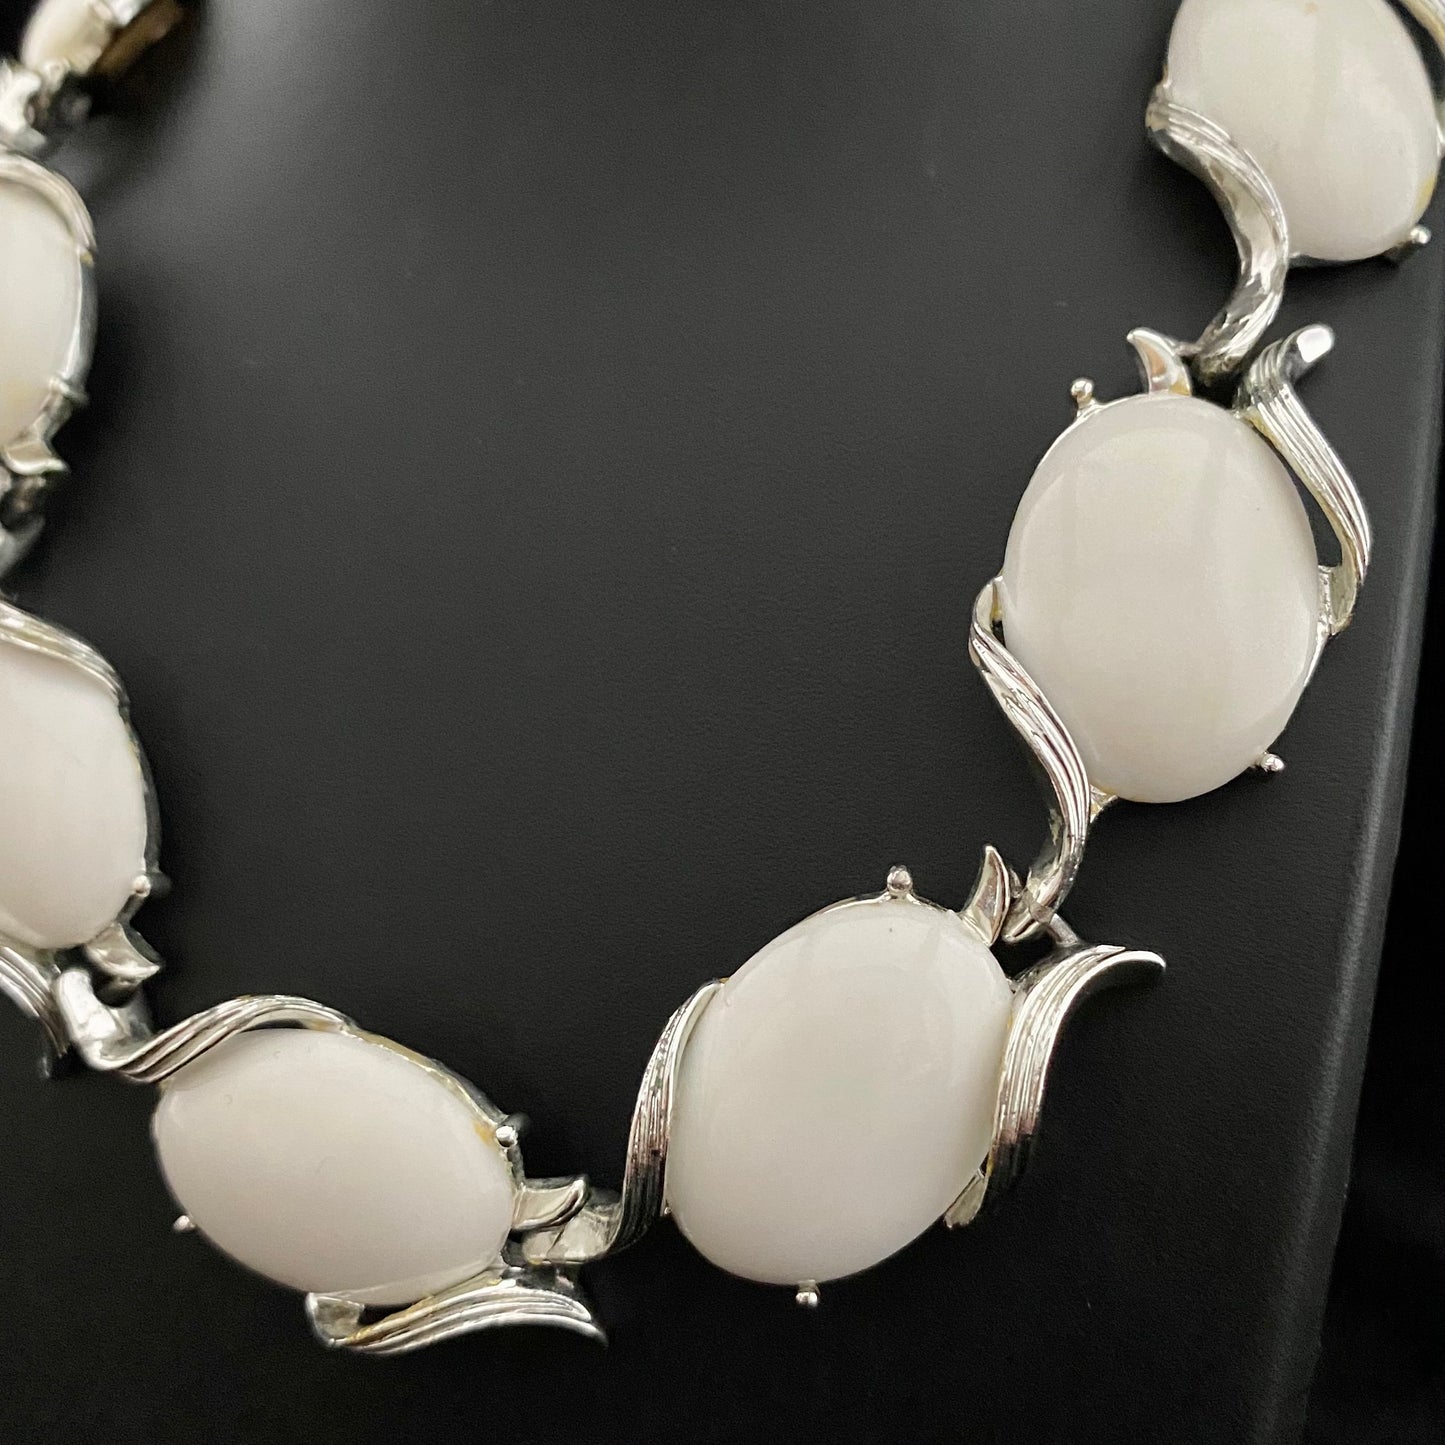 1950s White Thermoset Stone Chocker Necklace